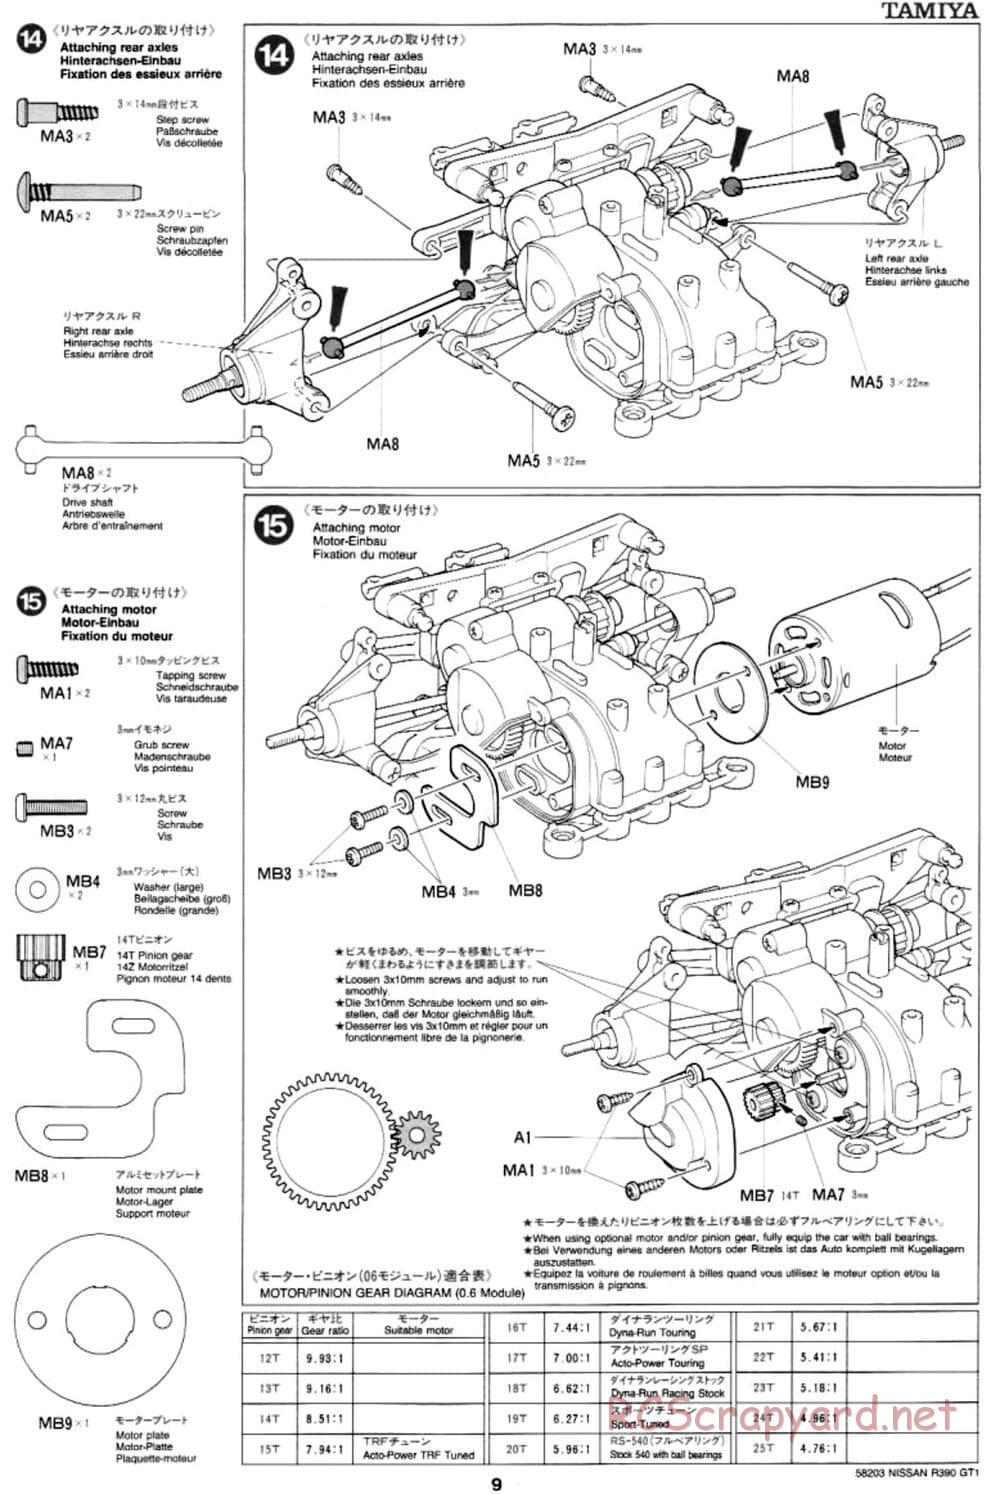 Tamiya - Nissan R390 GT1 - TA-03R Chassis - Manual - Page 9